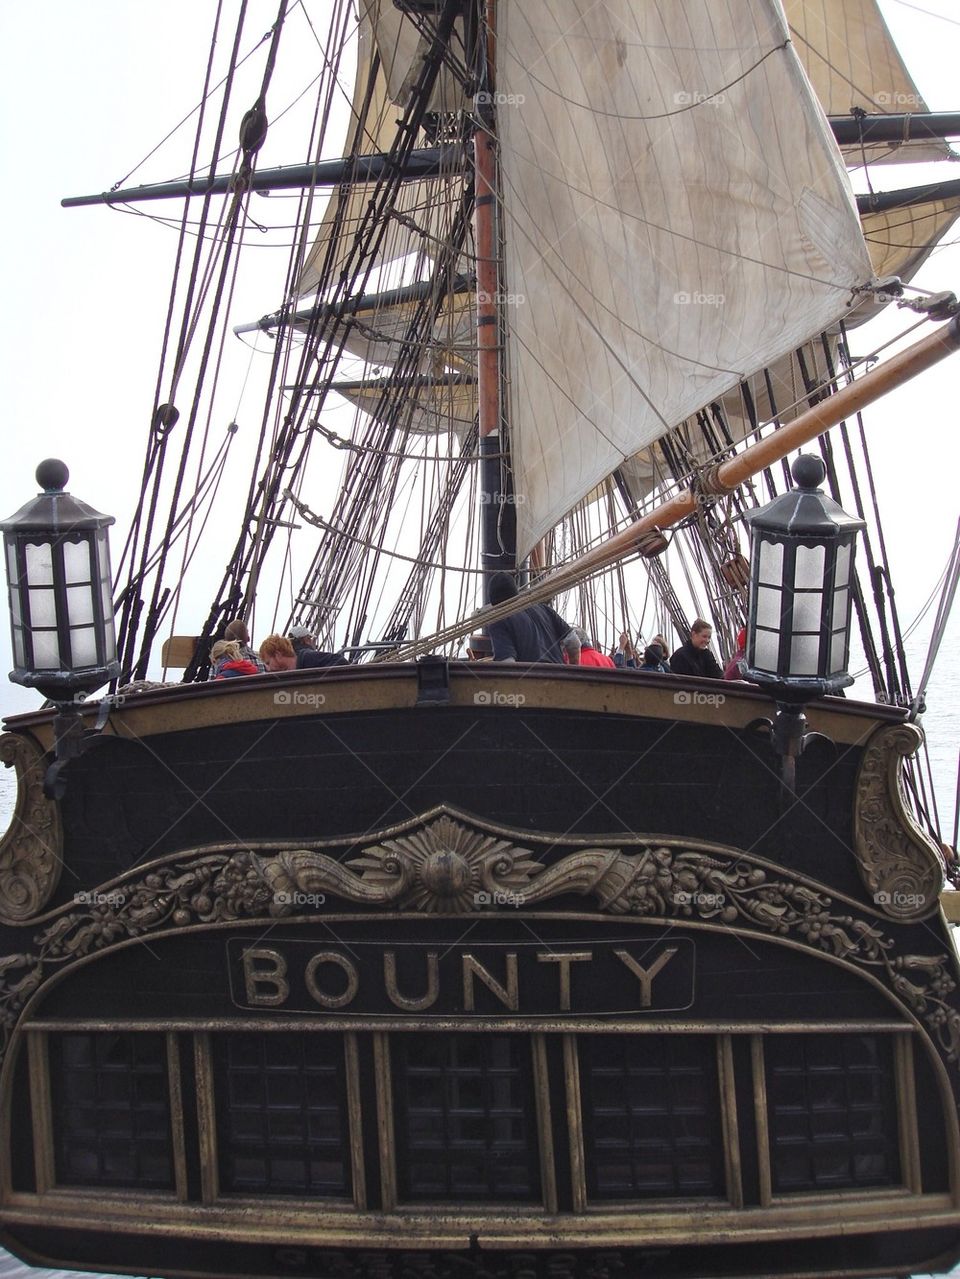 Bounty sailing away